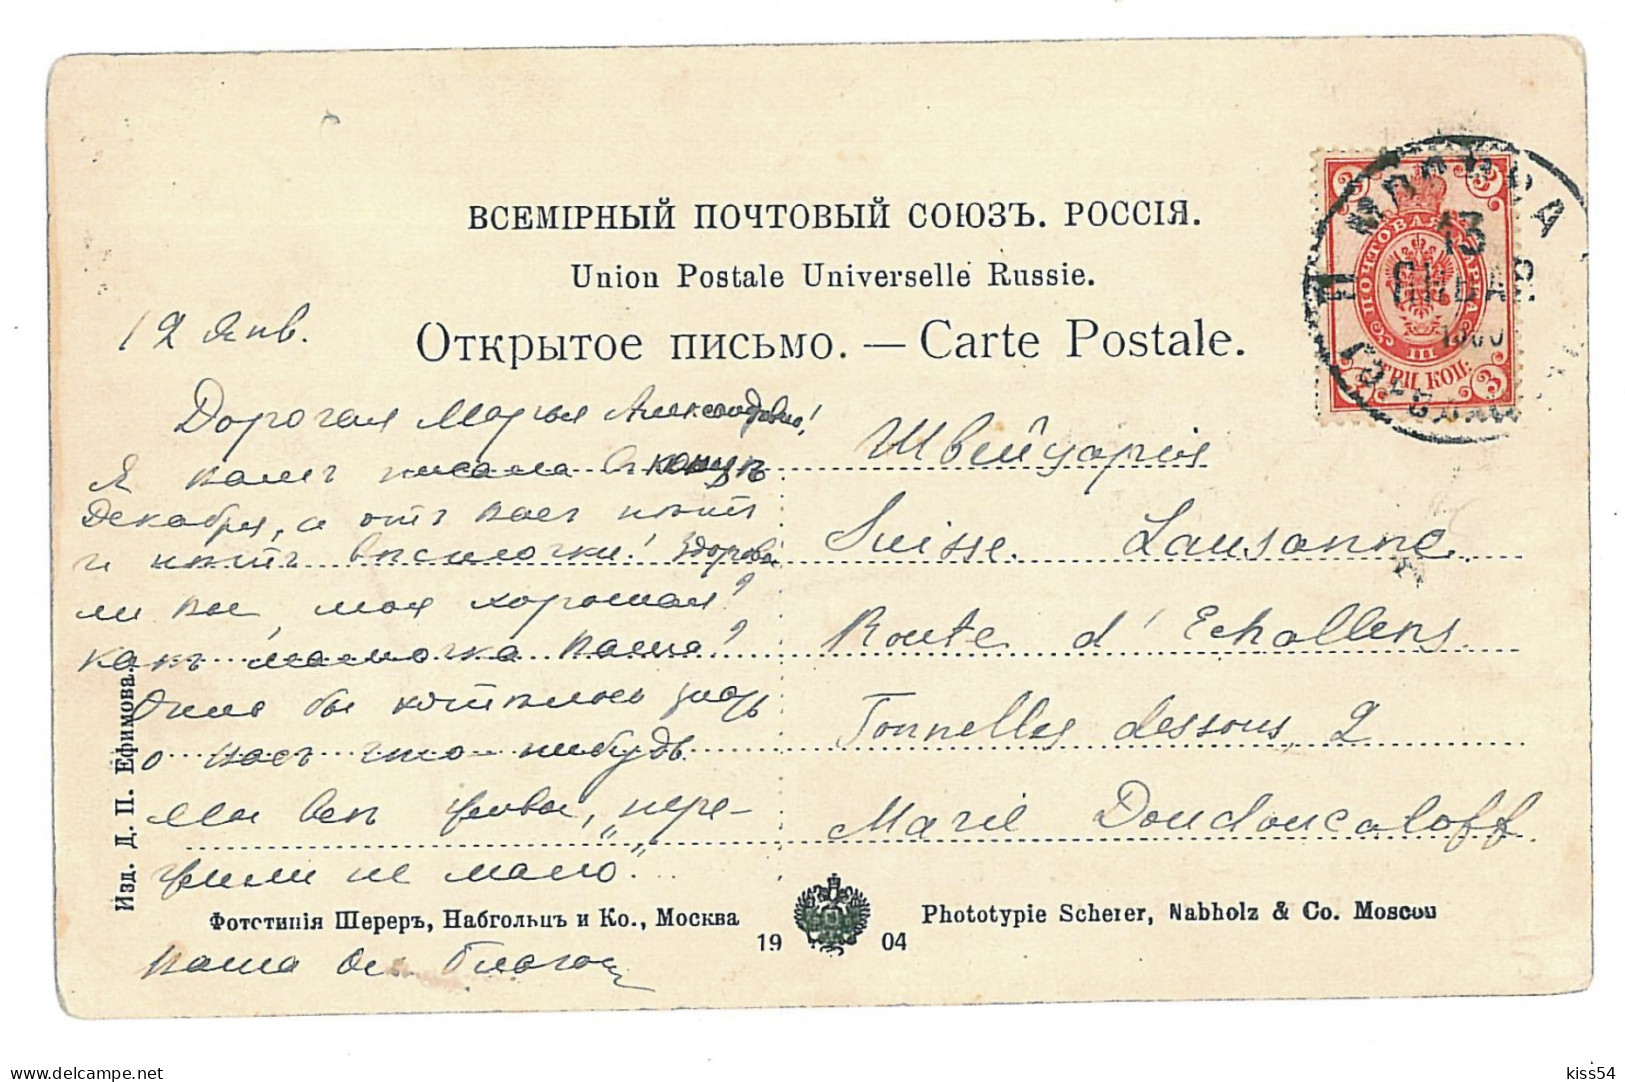 RUS 91 - 9897 VLADIVOSTOCK, Russia, Harbor - Old Postcard - Used - 1903 - Russie